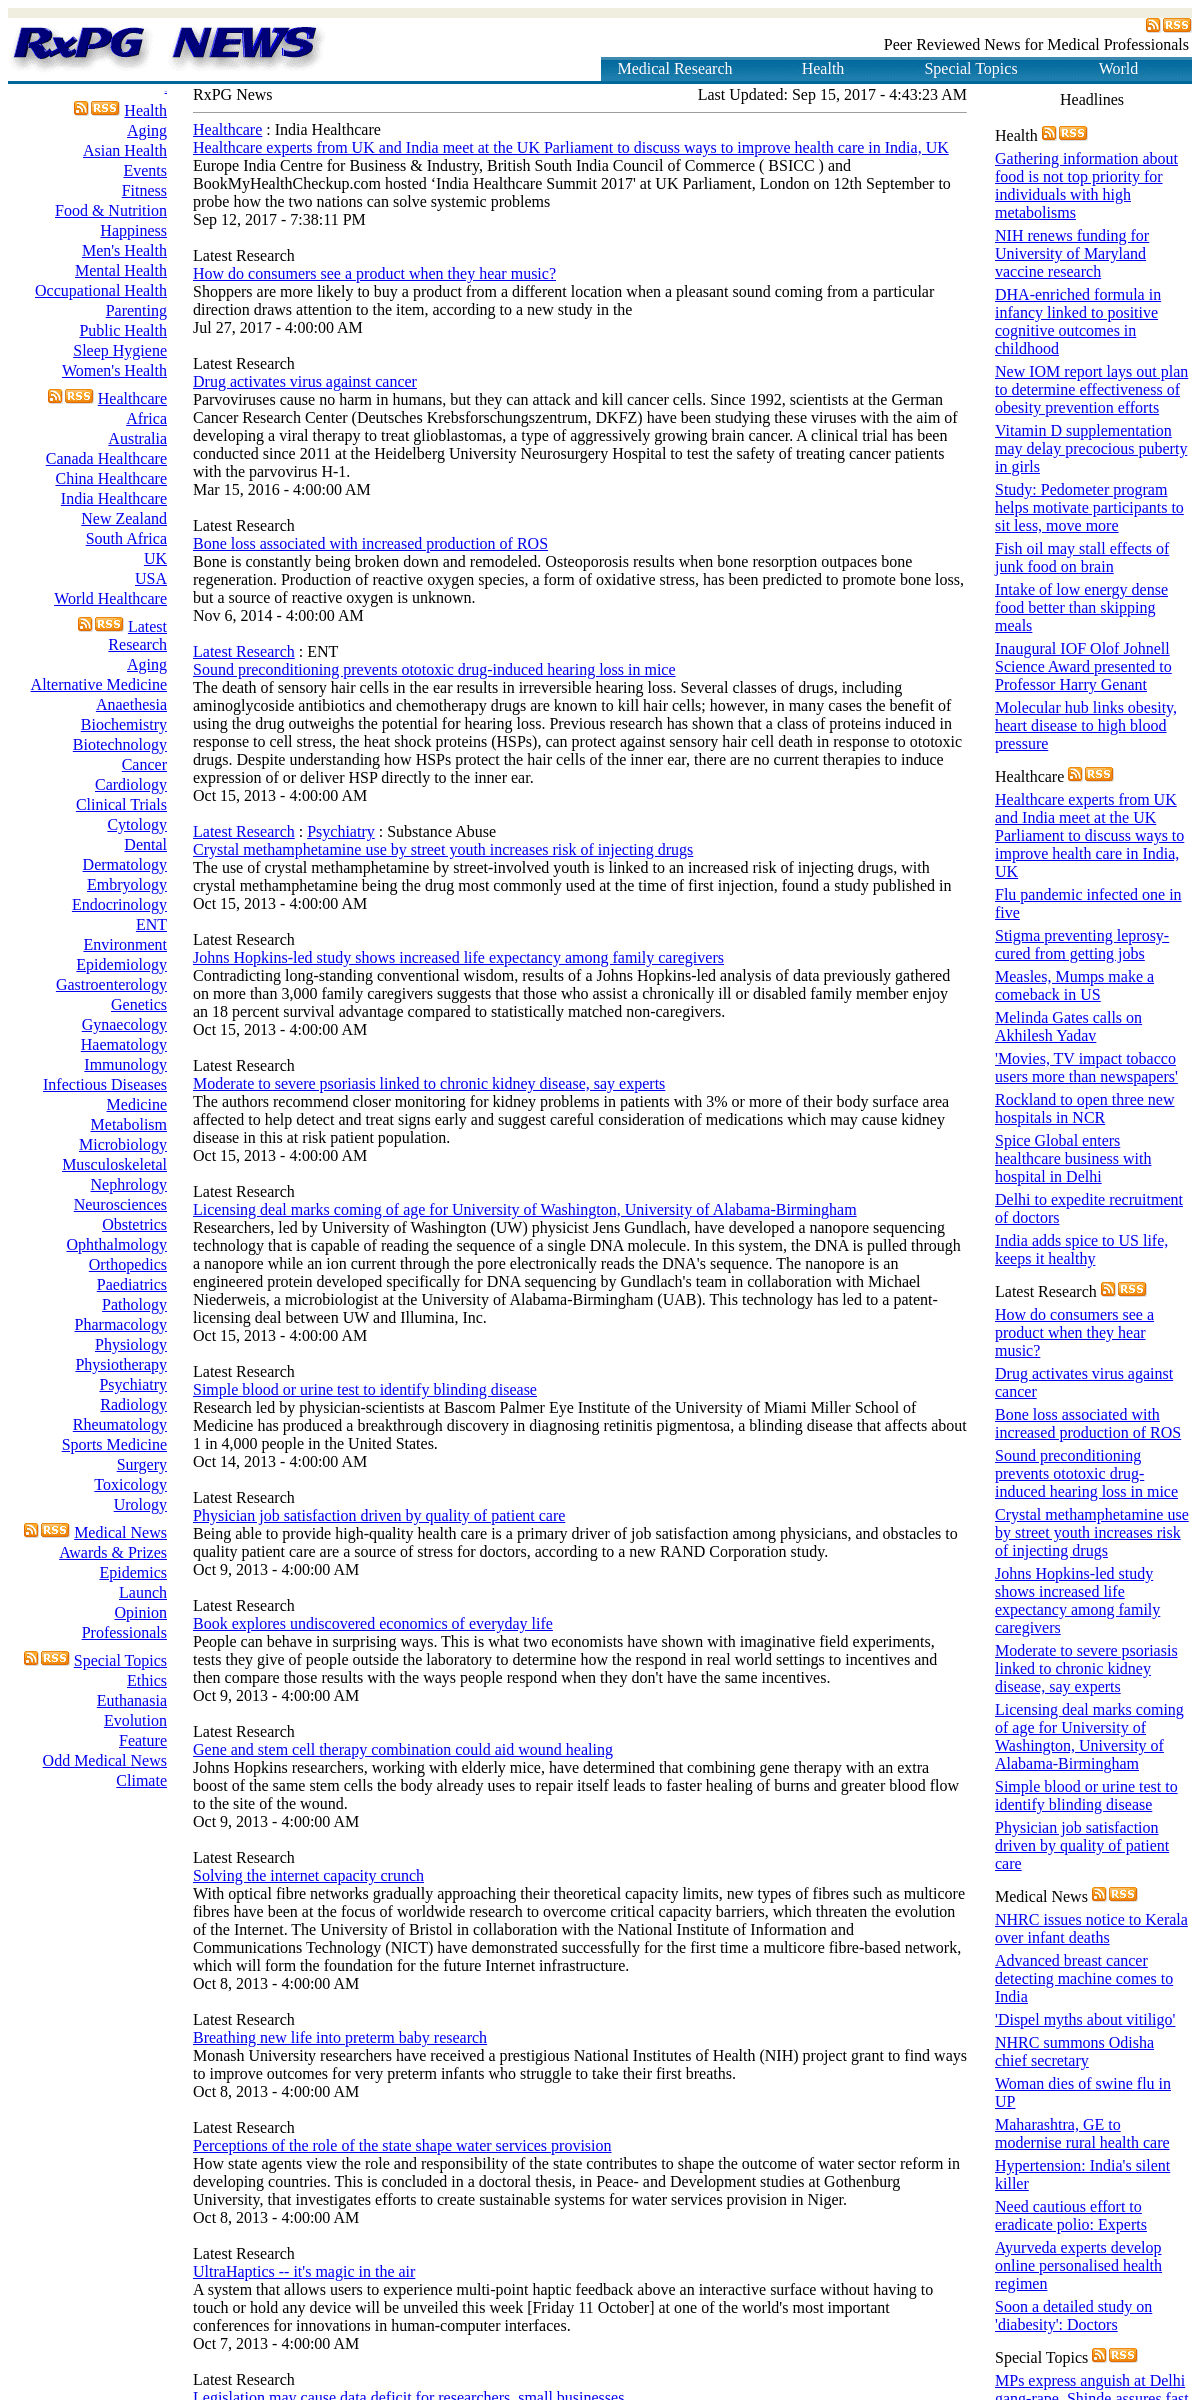 A complete backup of rxpgnews.com